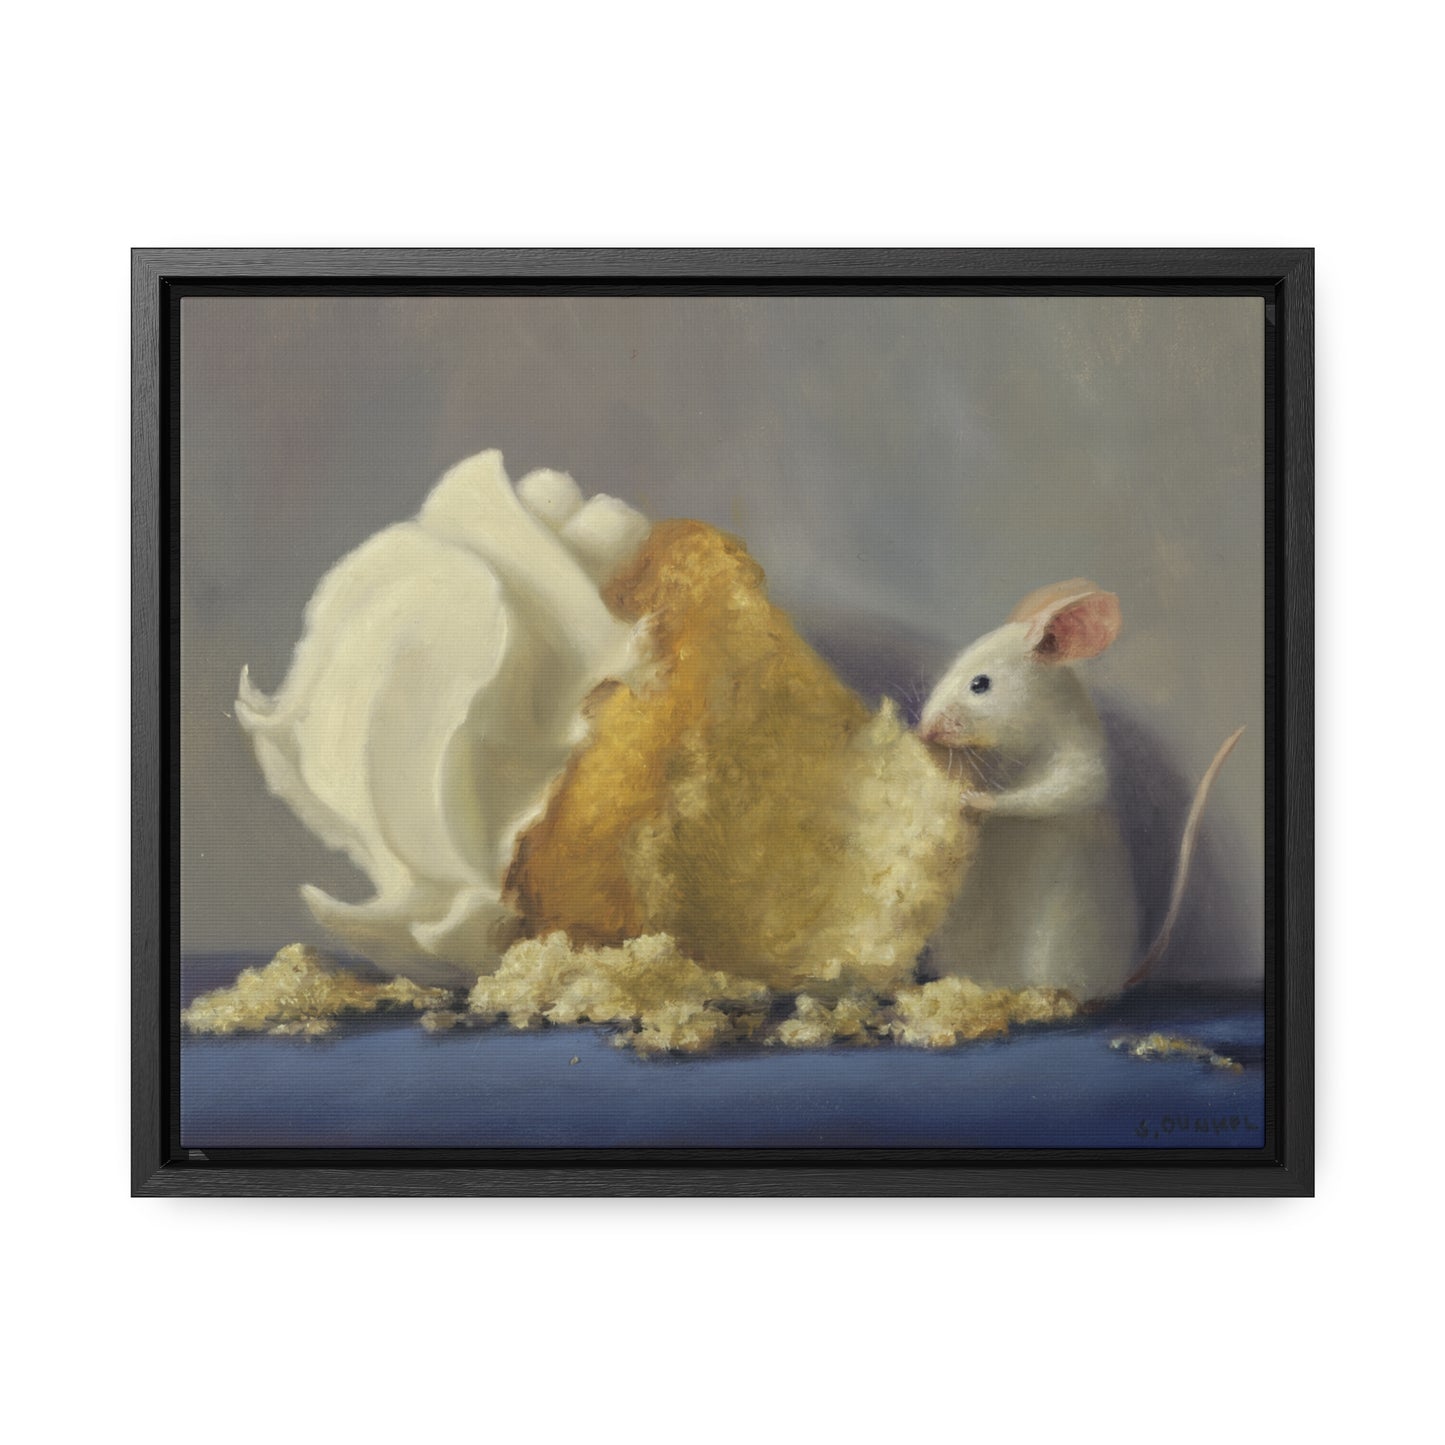 Stuart Dunkel: "Naughty Mouse" - Framed Canvas Reproduction